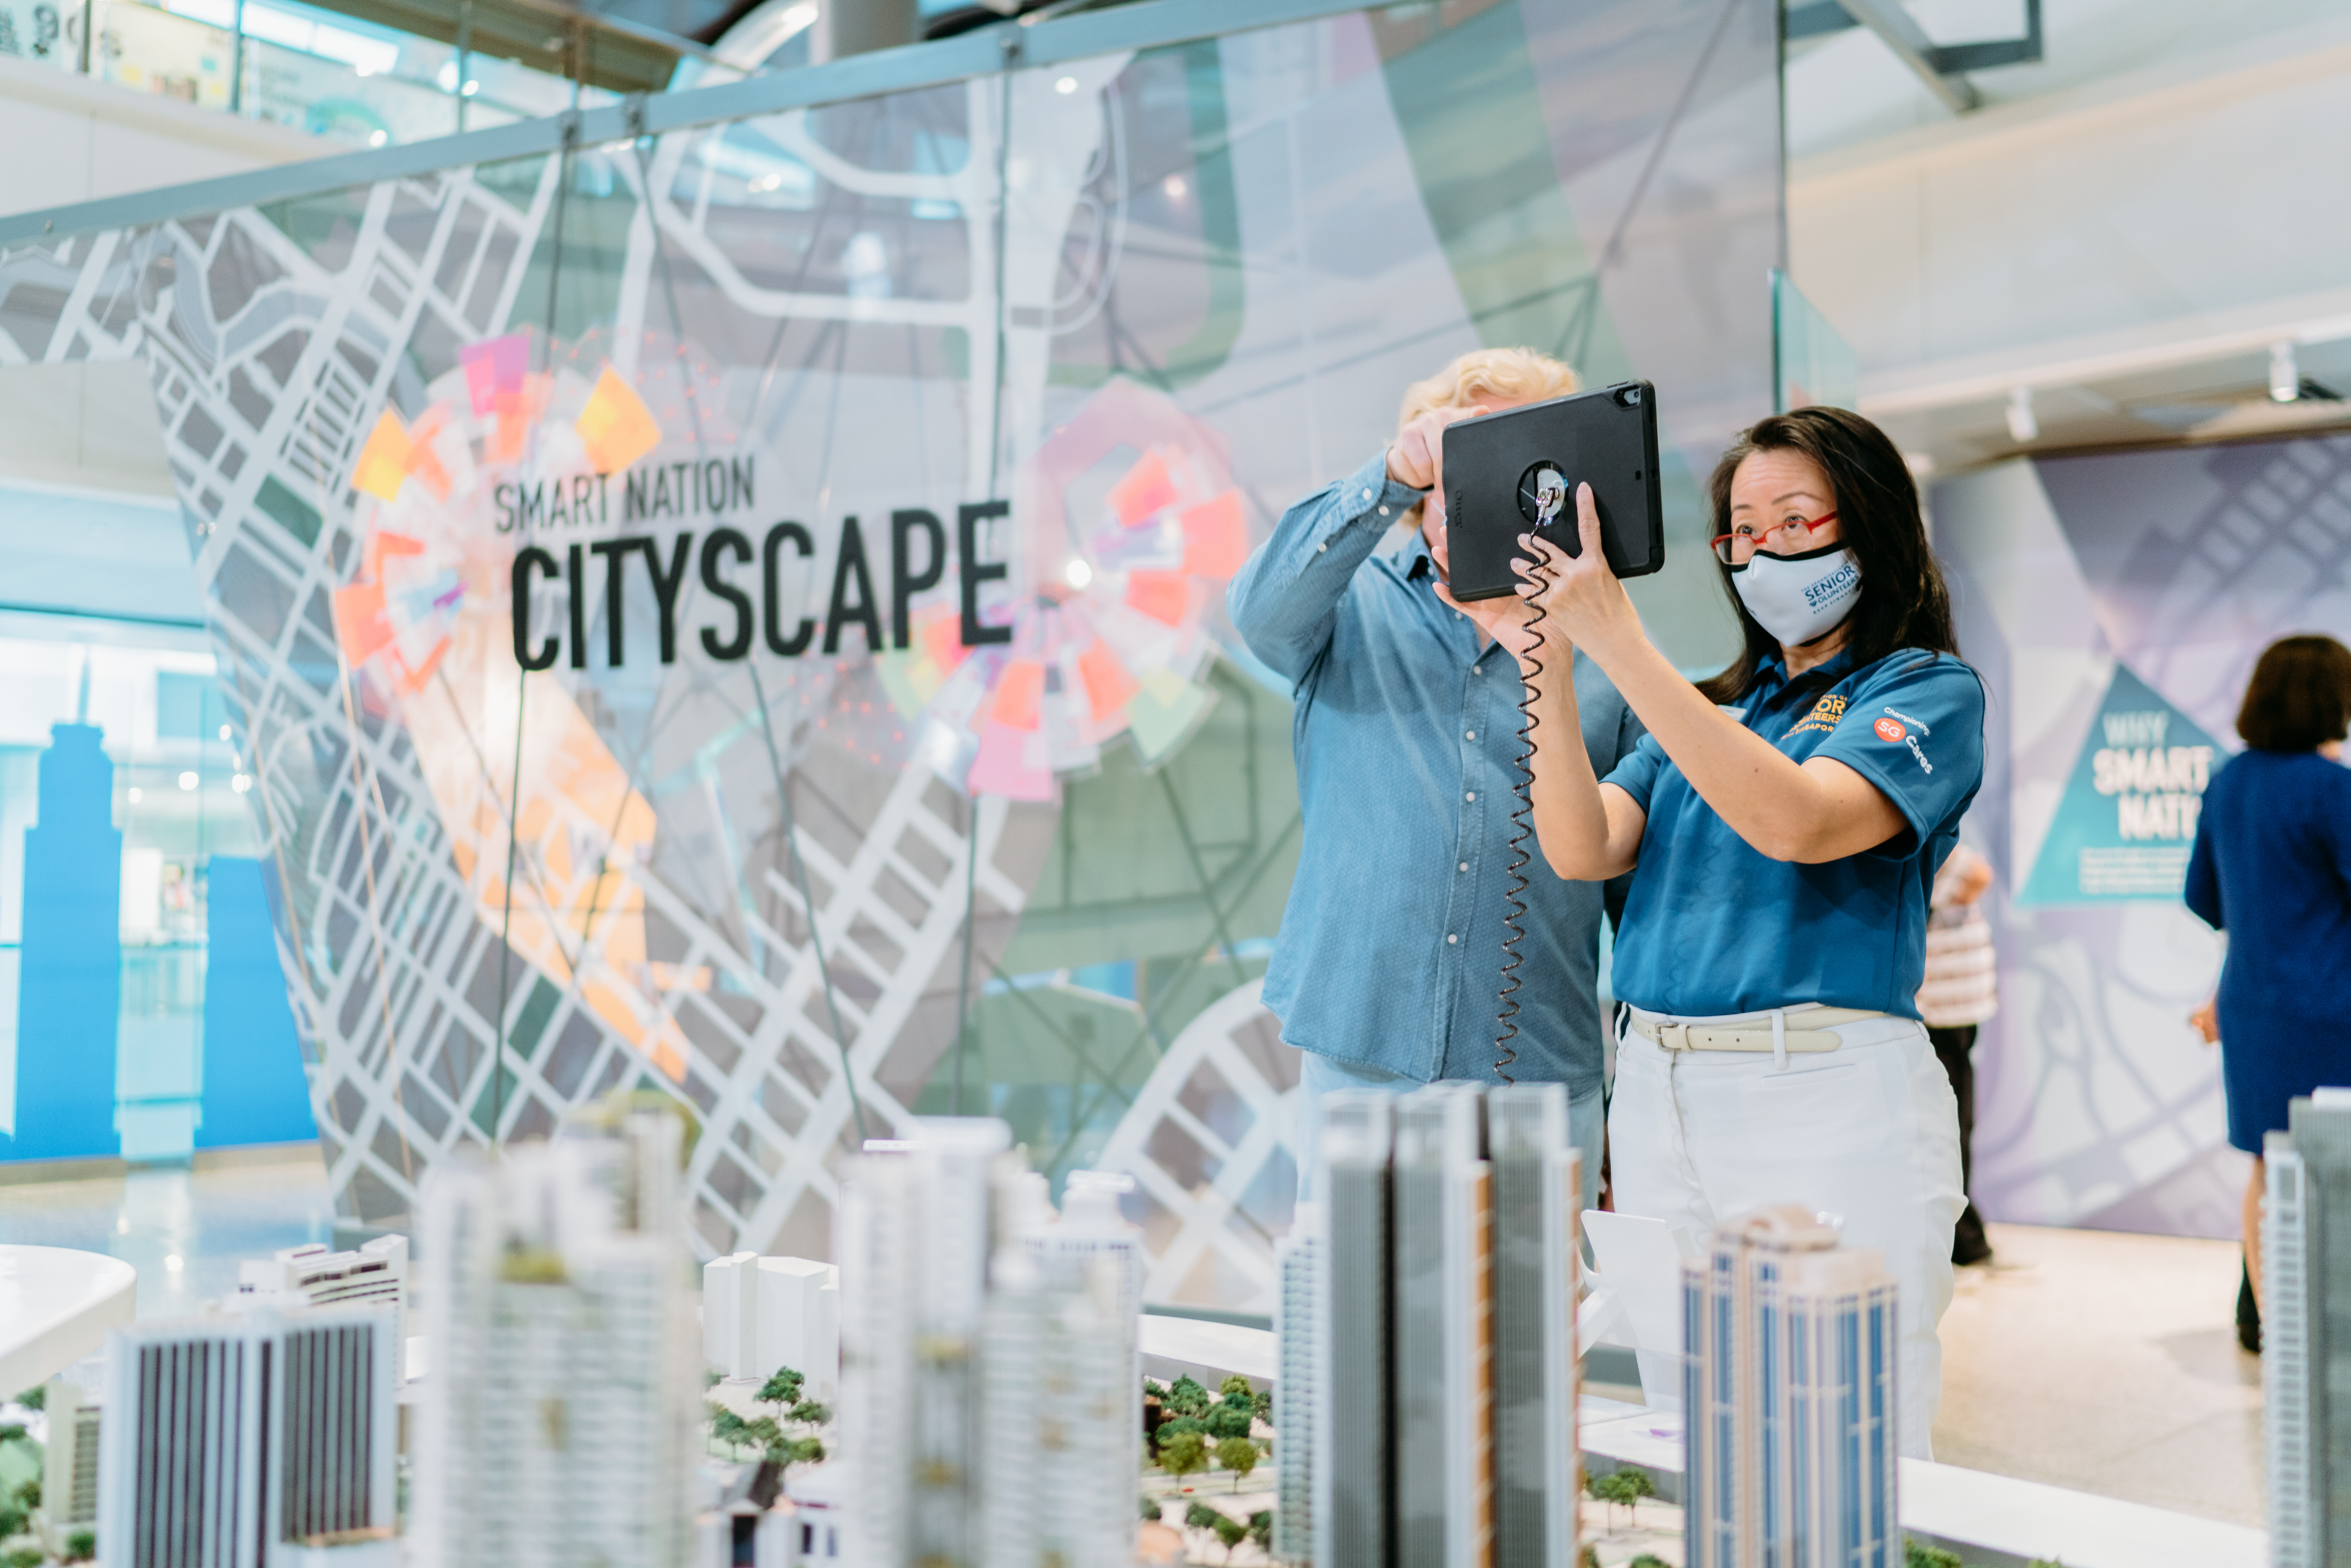 Smart Nation CityScape